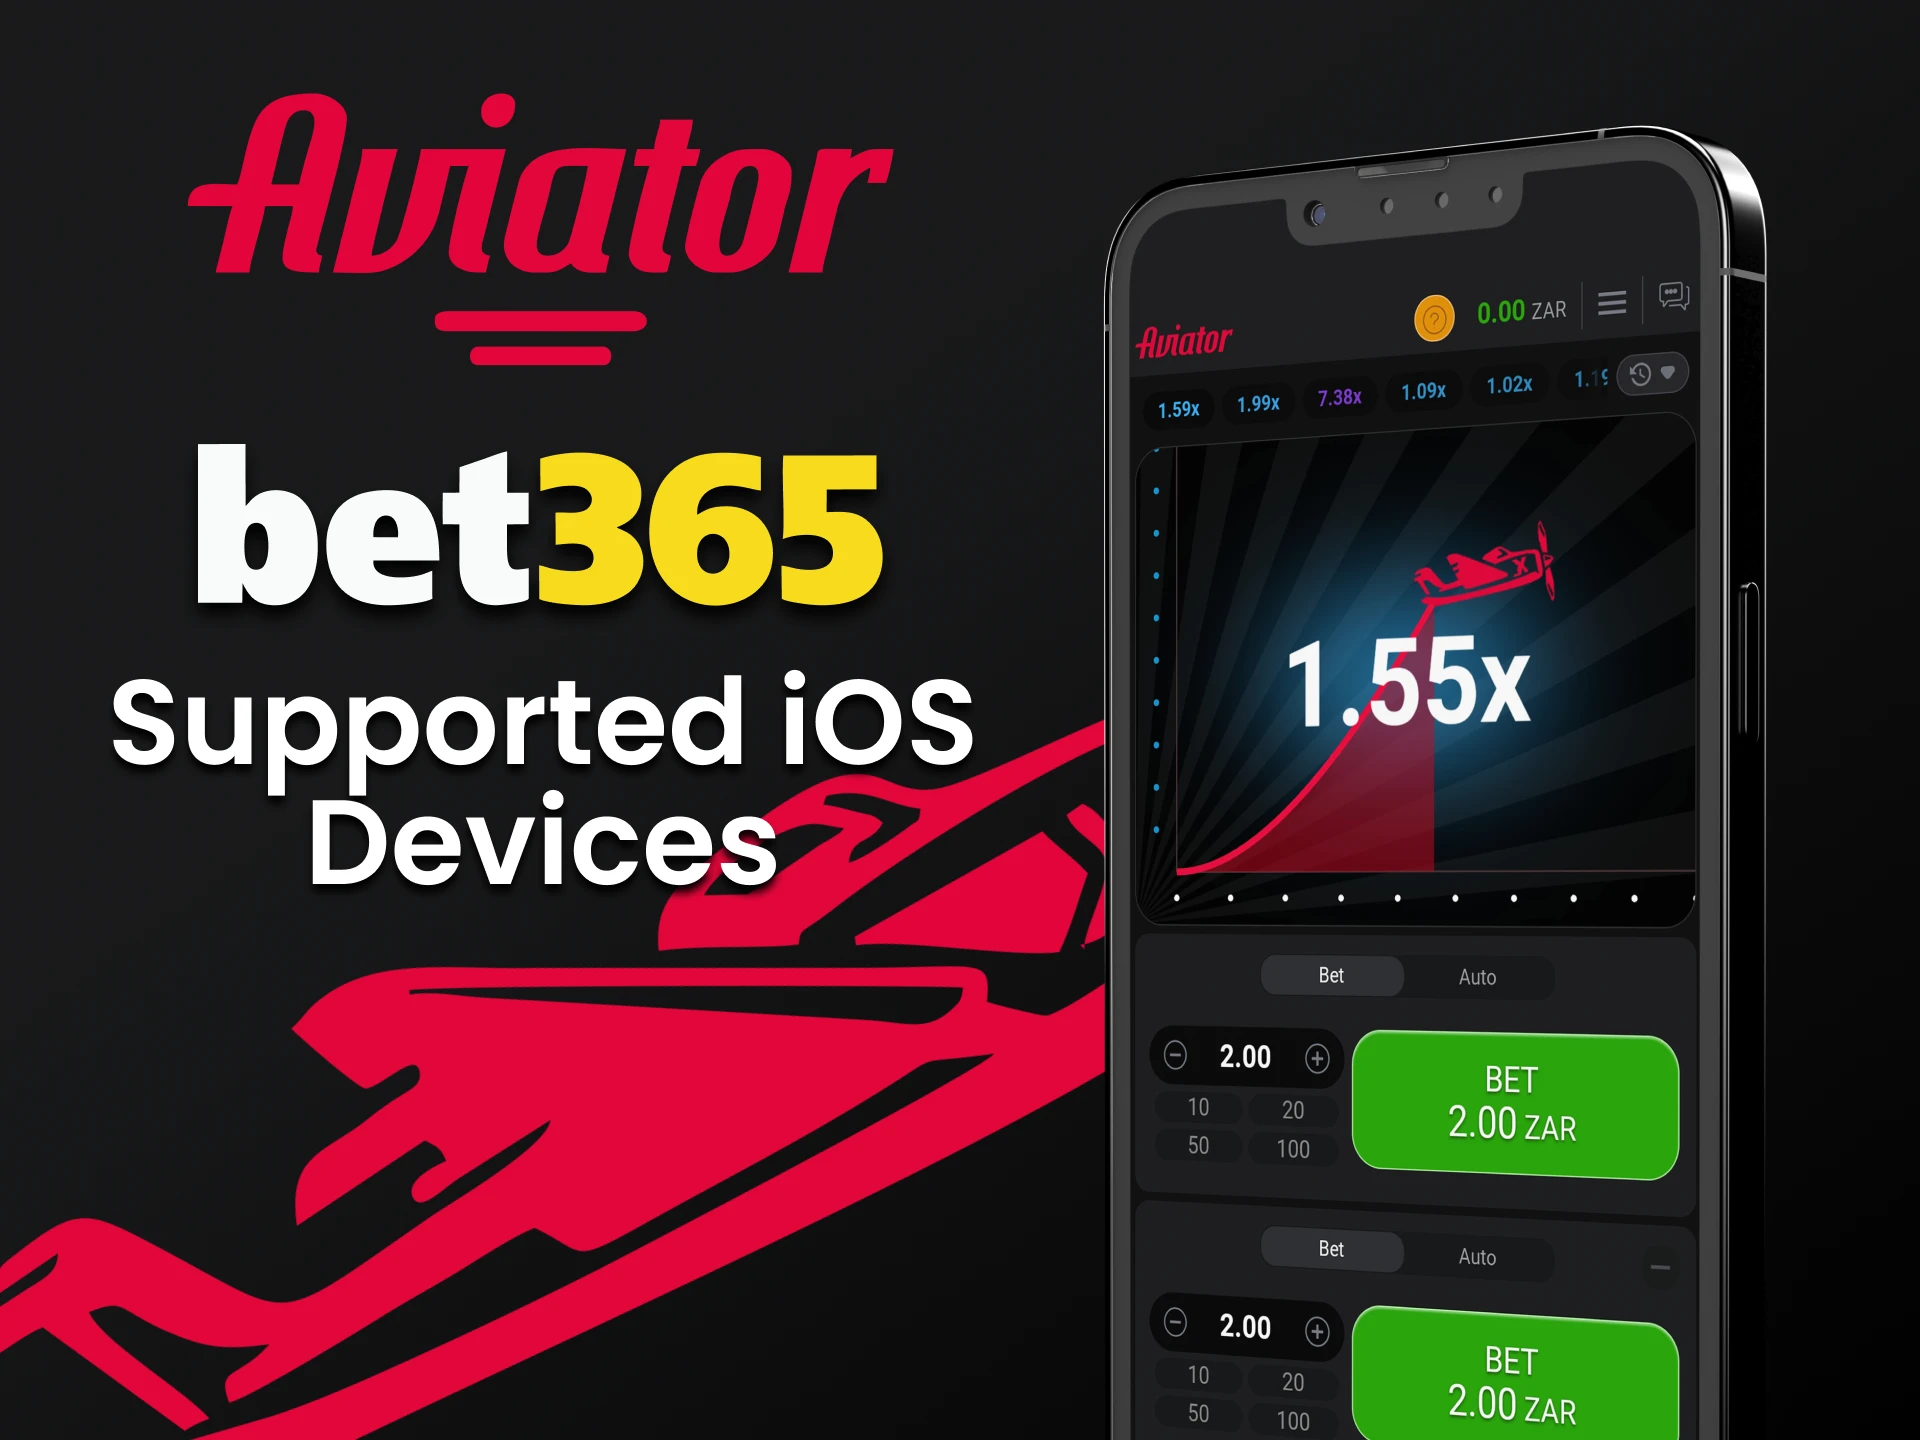 Play Aviator through the Bet365 app for iOS.